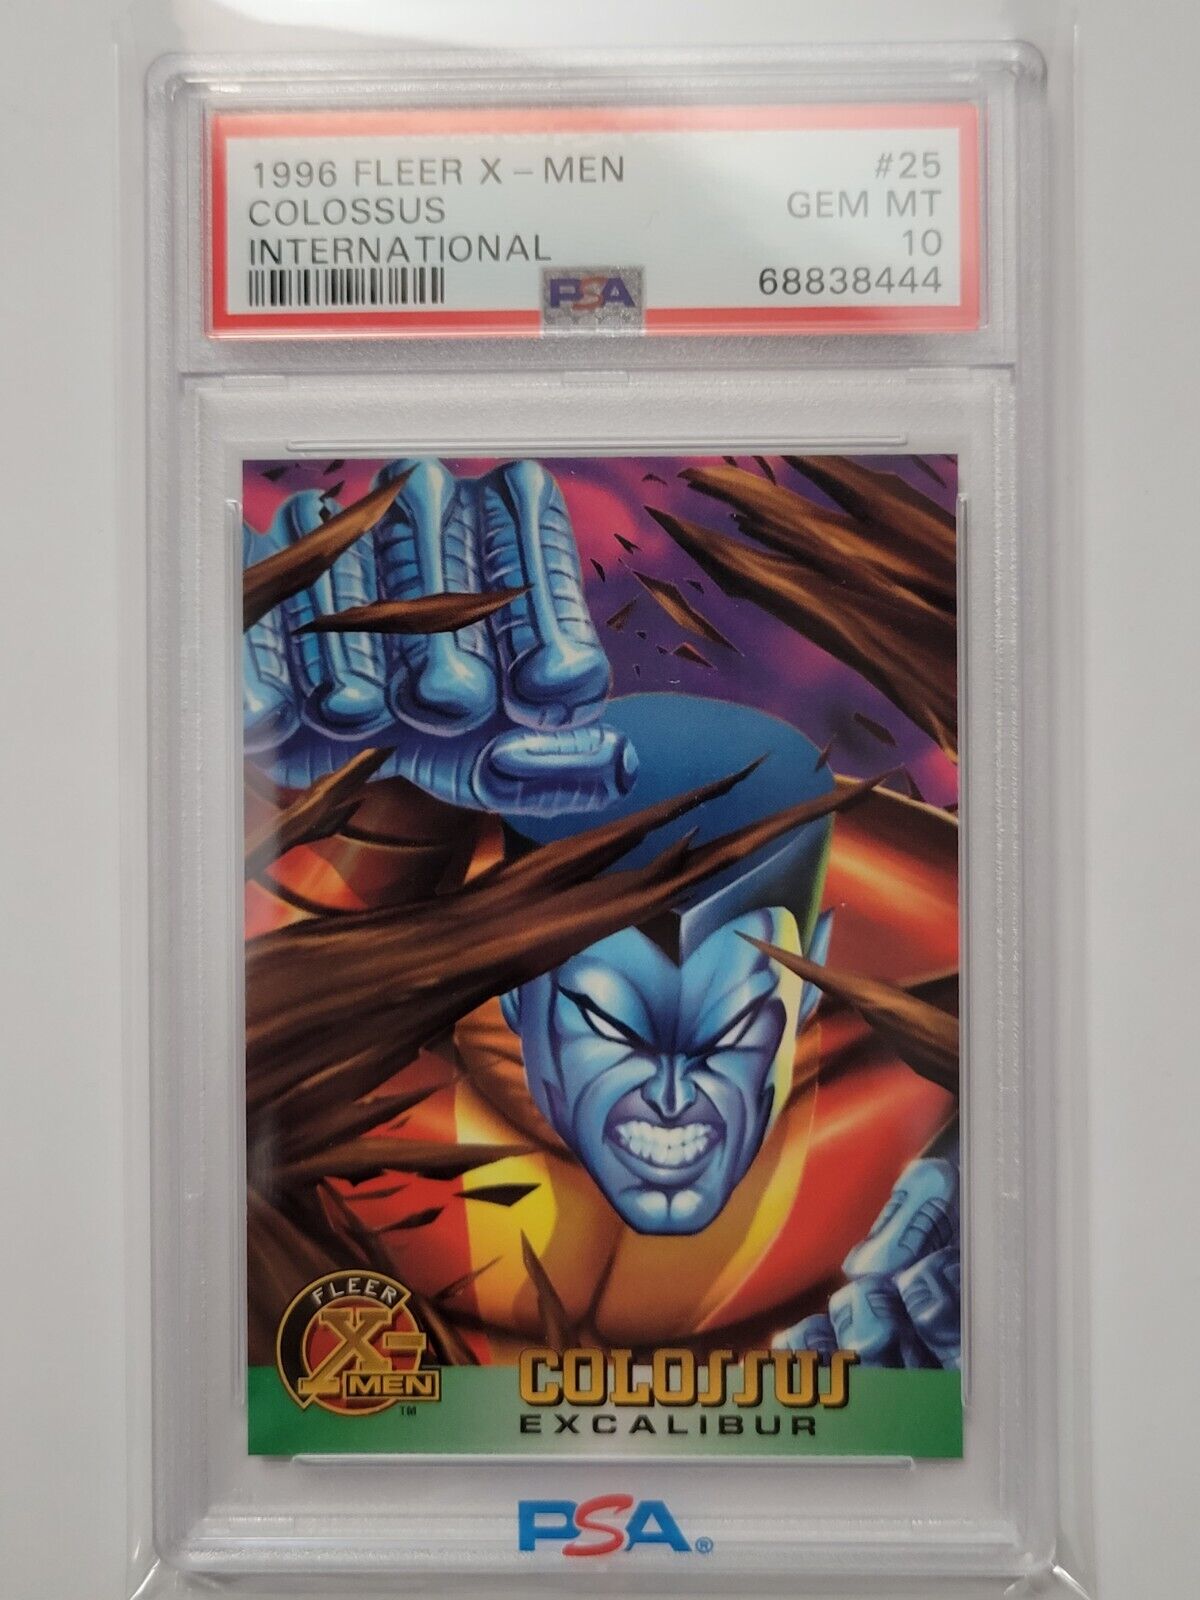 Colossus 1996 Fleer X-Men international #25 Excalibur Card PSA 10  (POP 1)